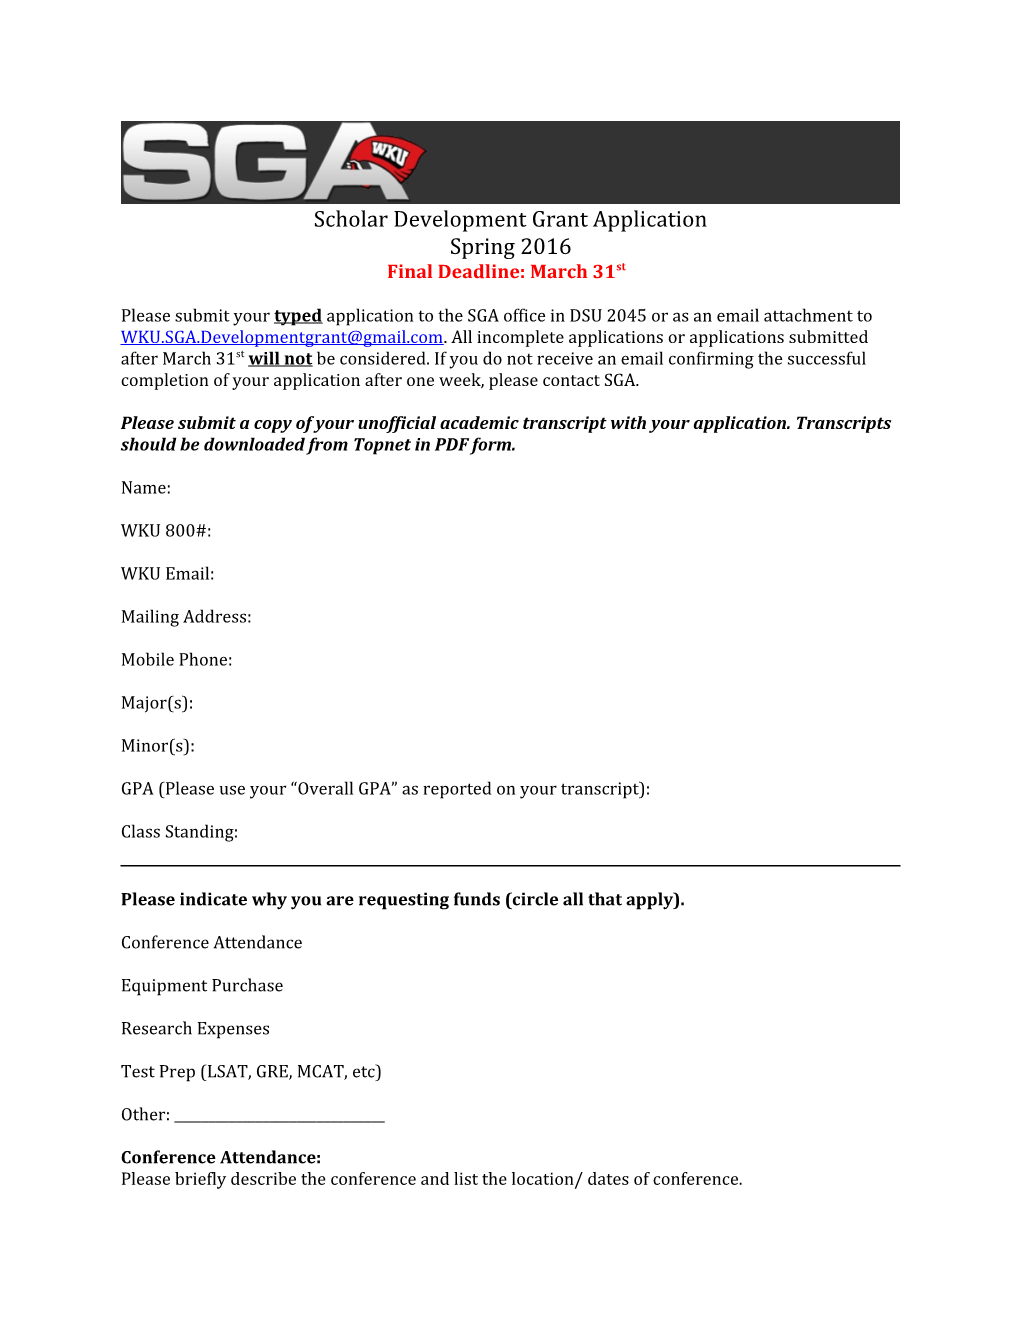 SGA Scholar Development Grant Application s1